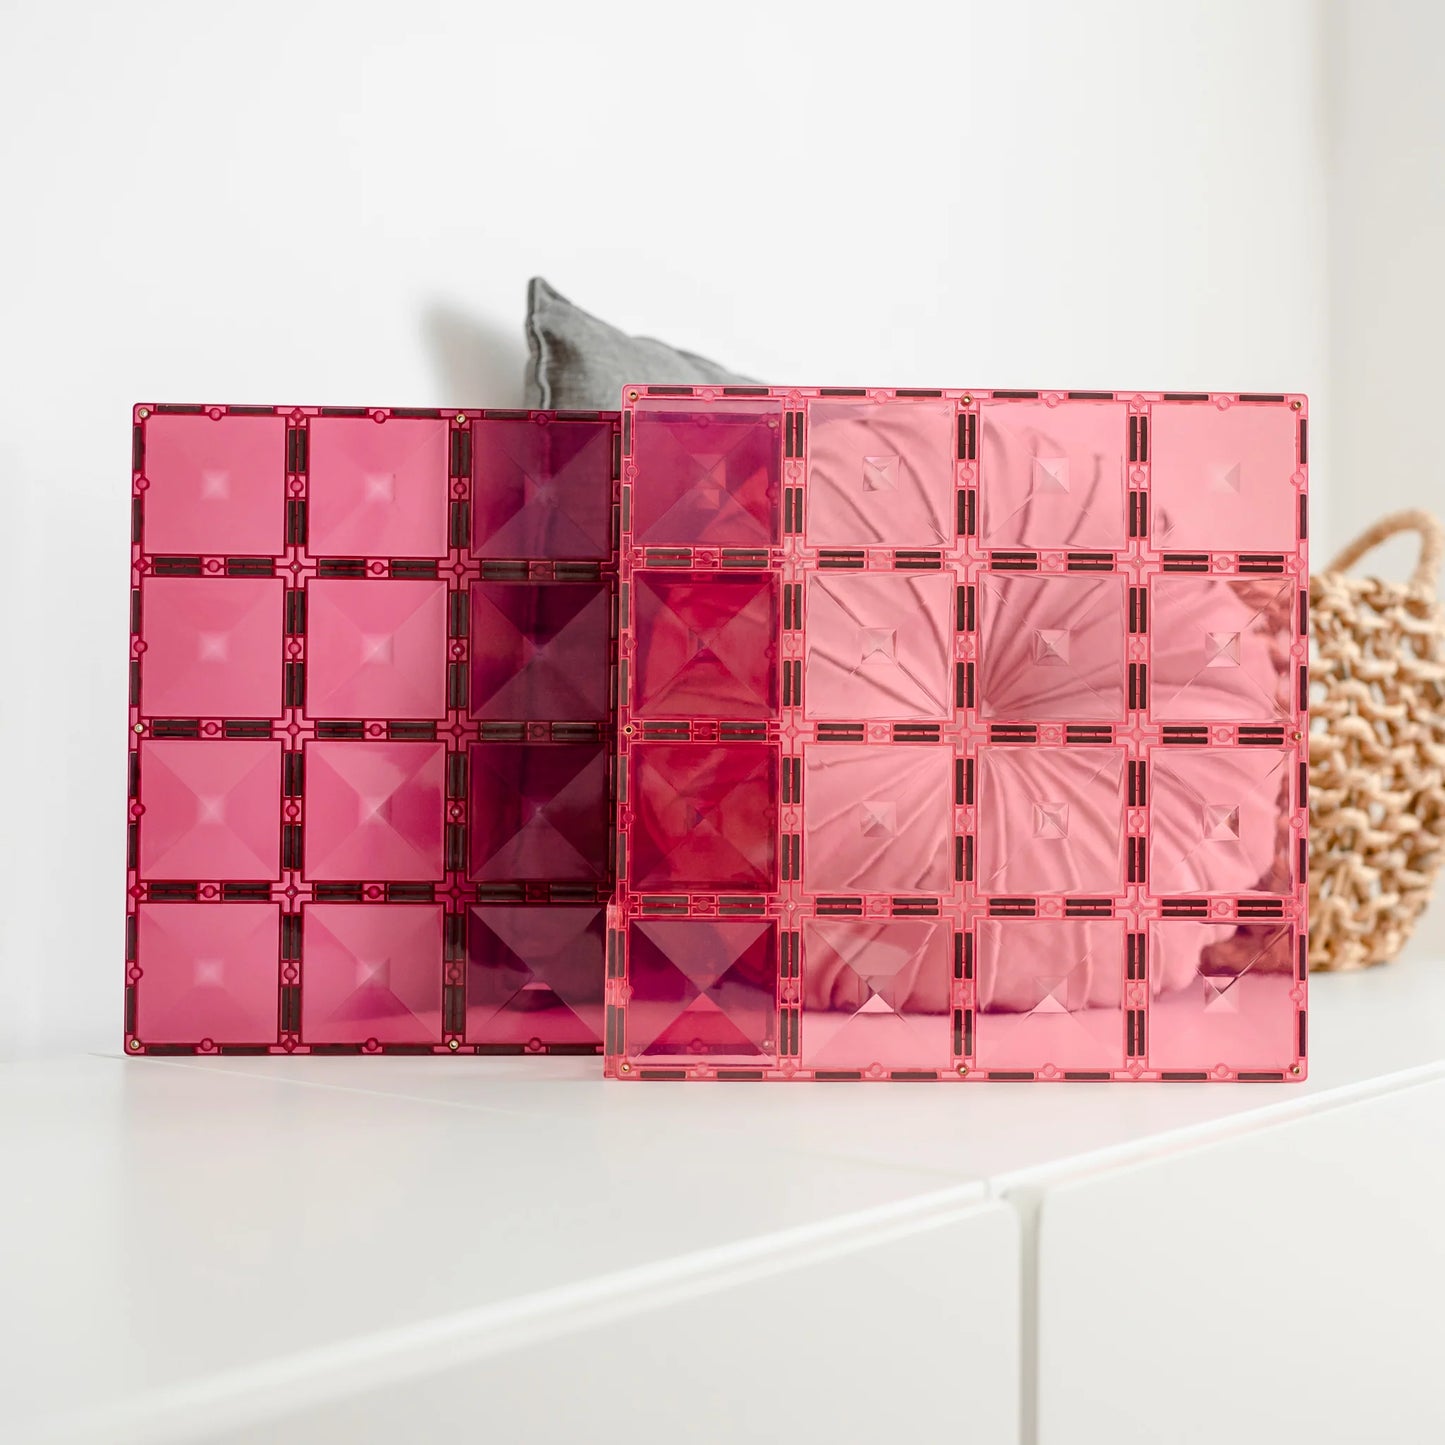 Connetix Tiles 2 Piece Base Plate Pink & Berry Pack